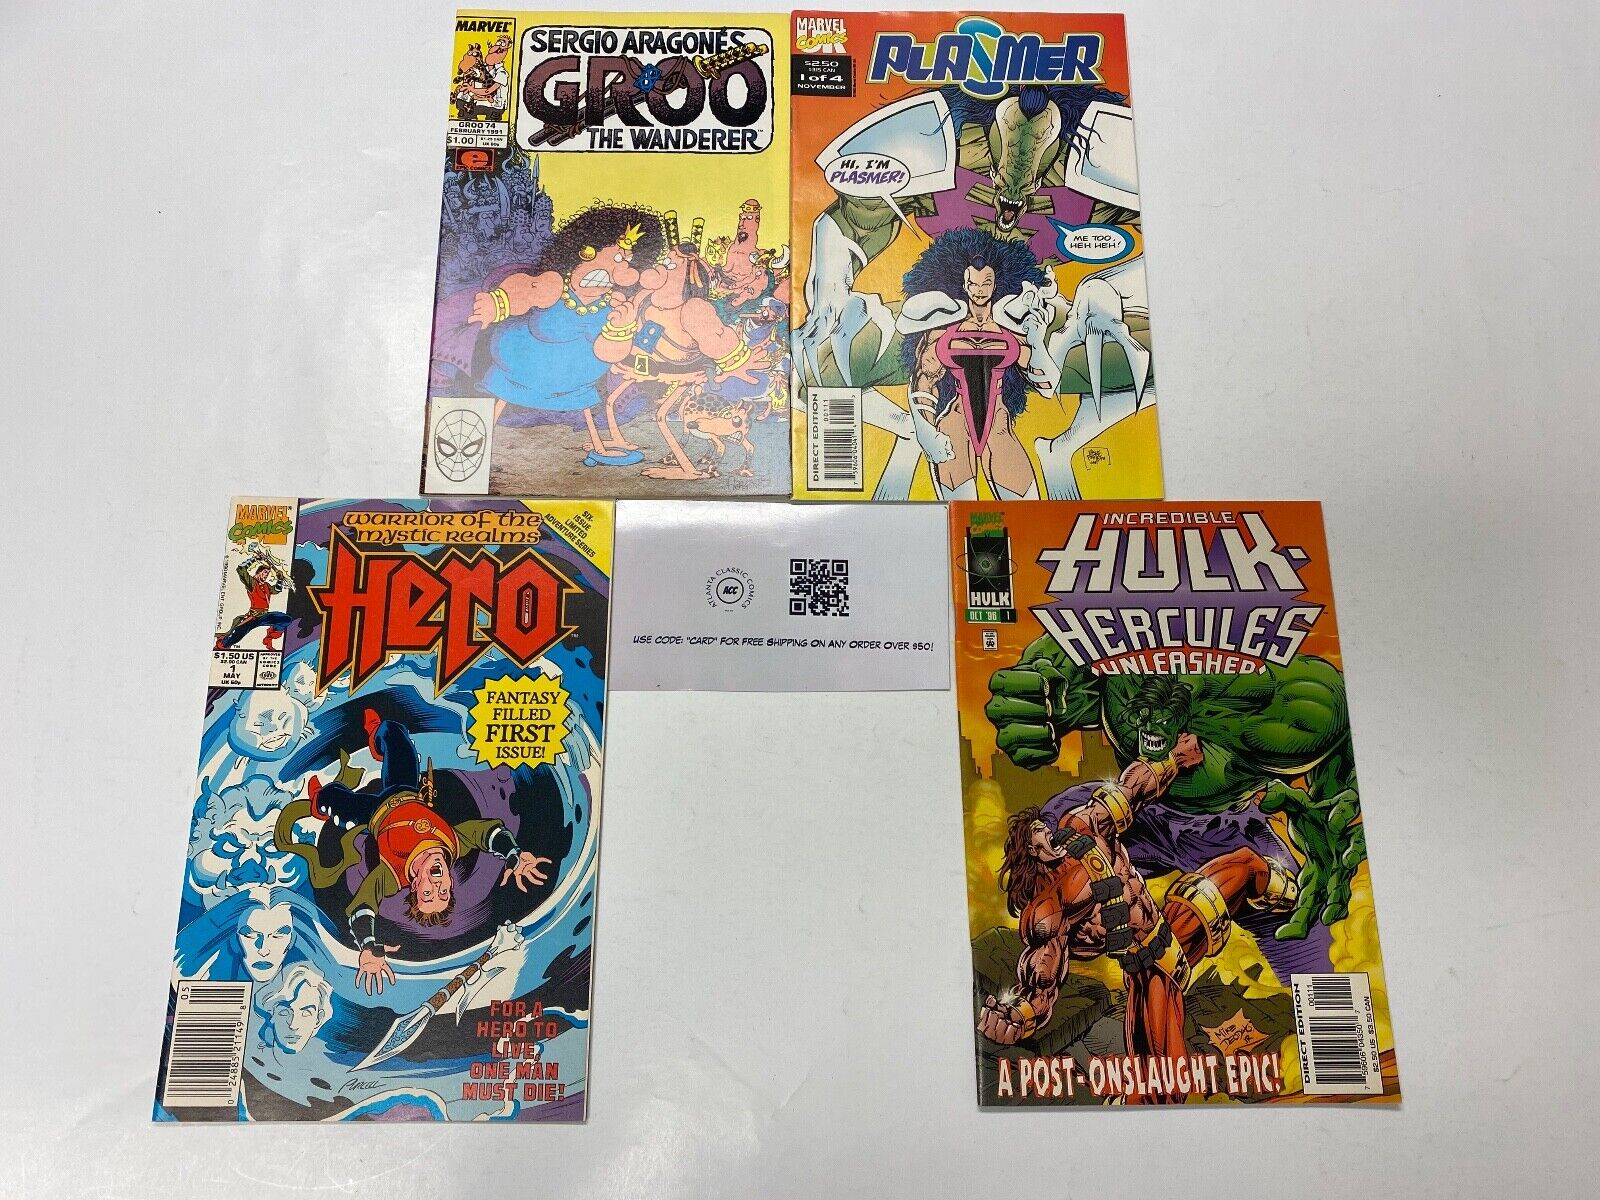 4 MARVEL comic book Groo #74 Plasmer #1 Hero #1 Hulk Hercules #1 10 KM10